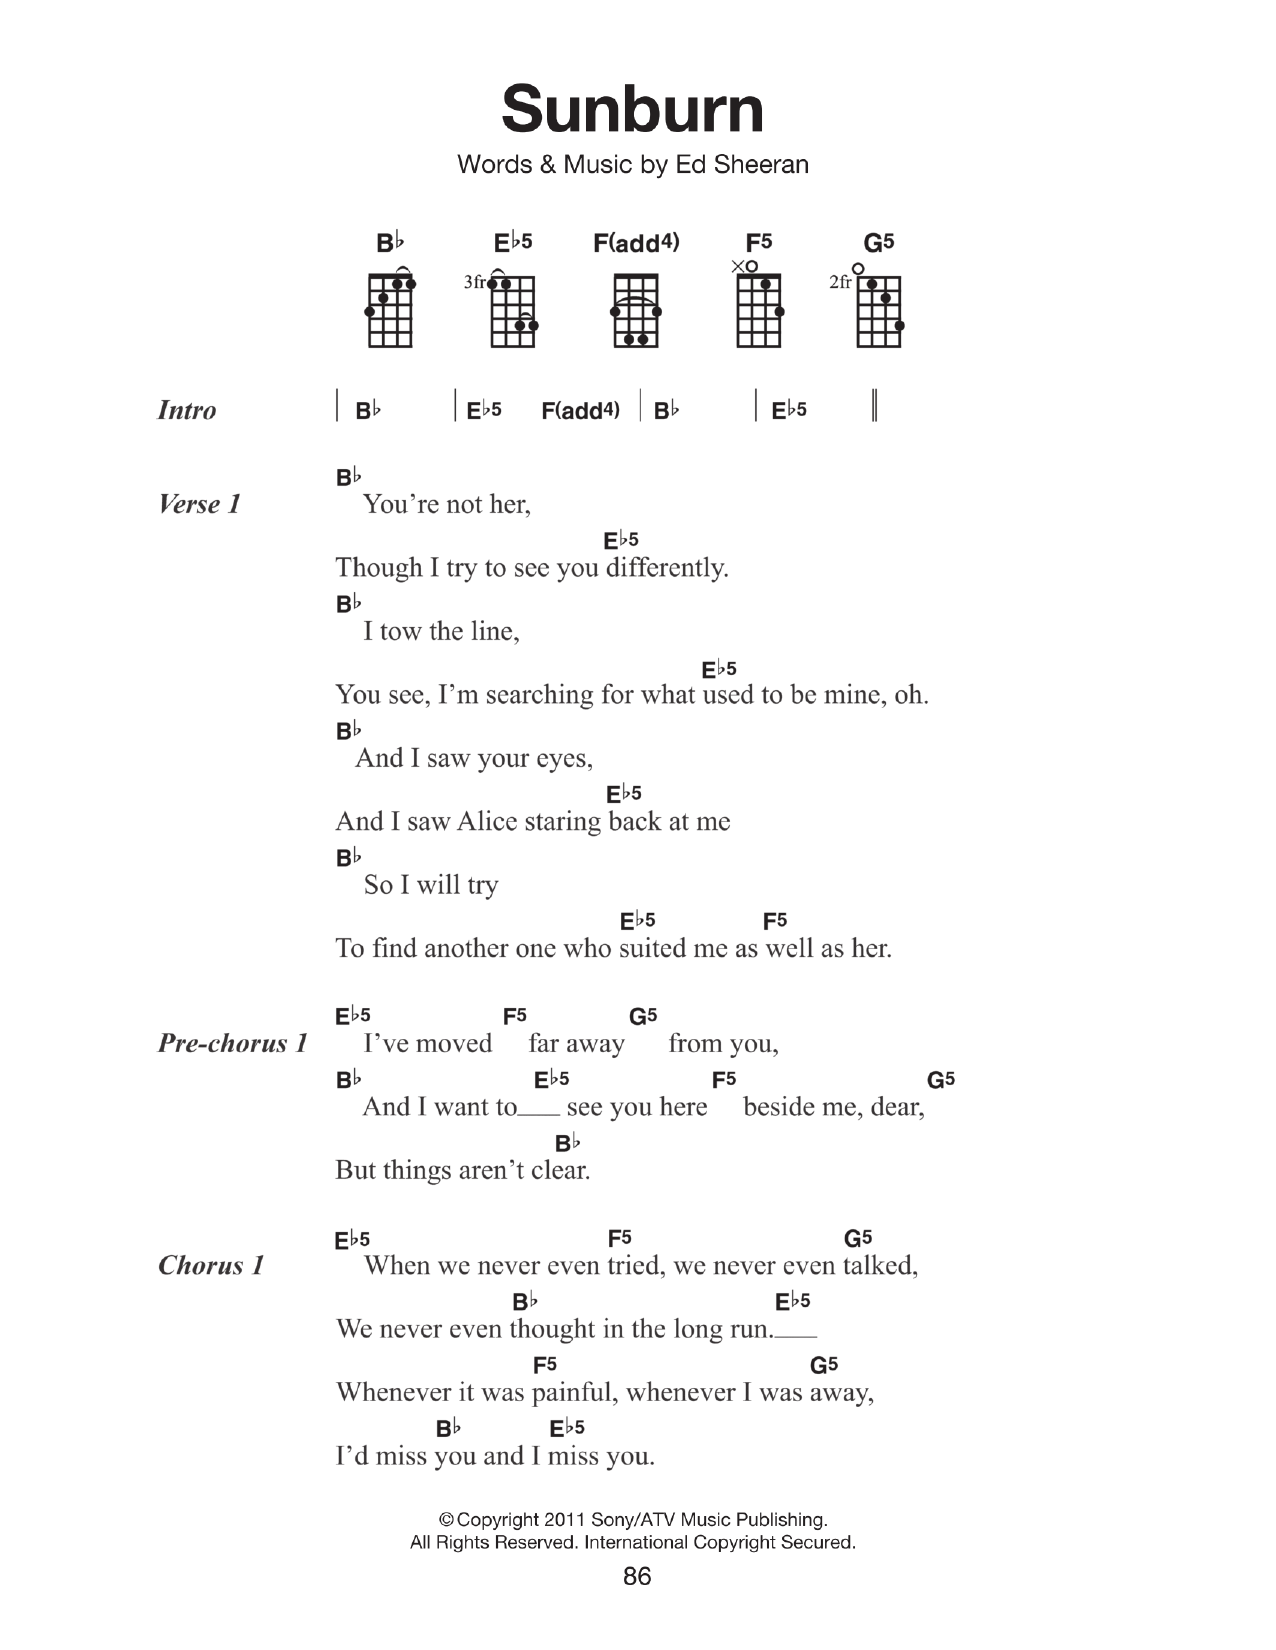 Download Ed Sheeran Sunburn Sheet Music and learn how to play Lyrics & Chords PDF digital score in minutes